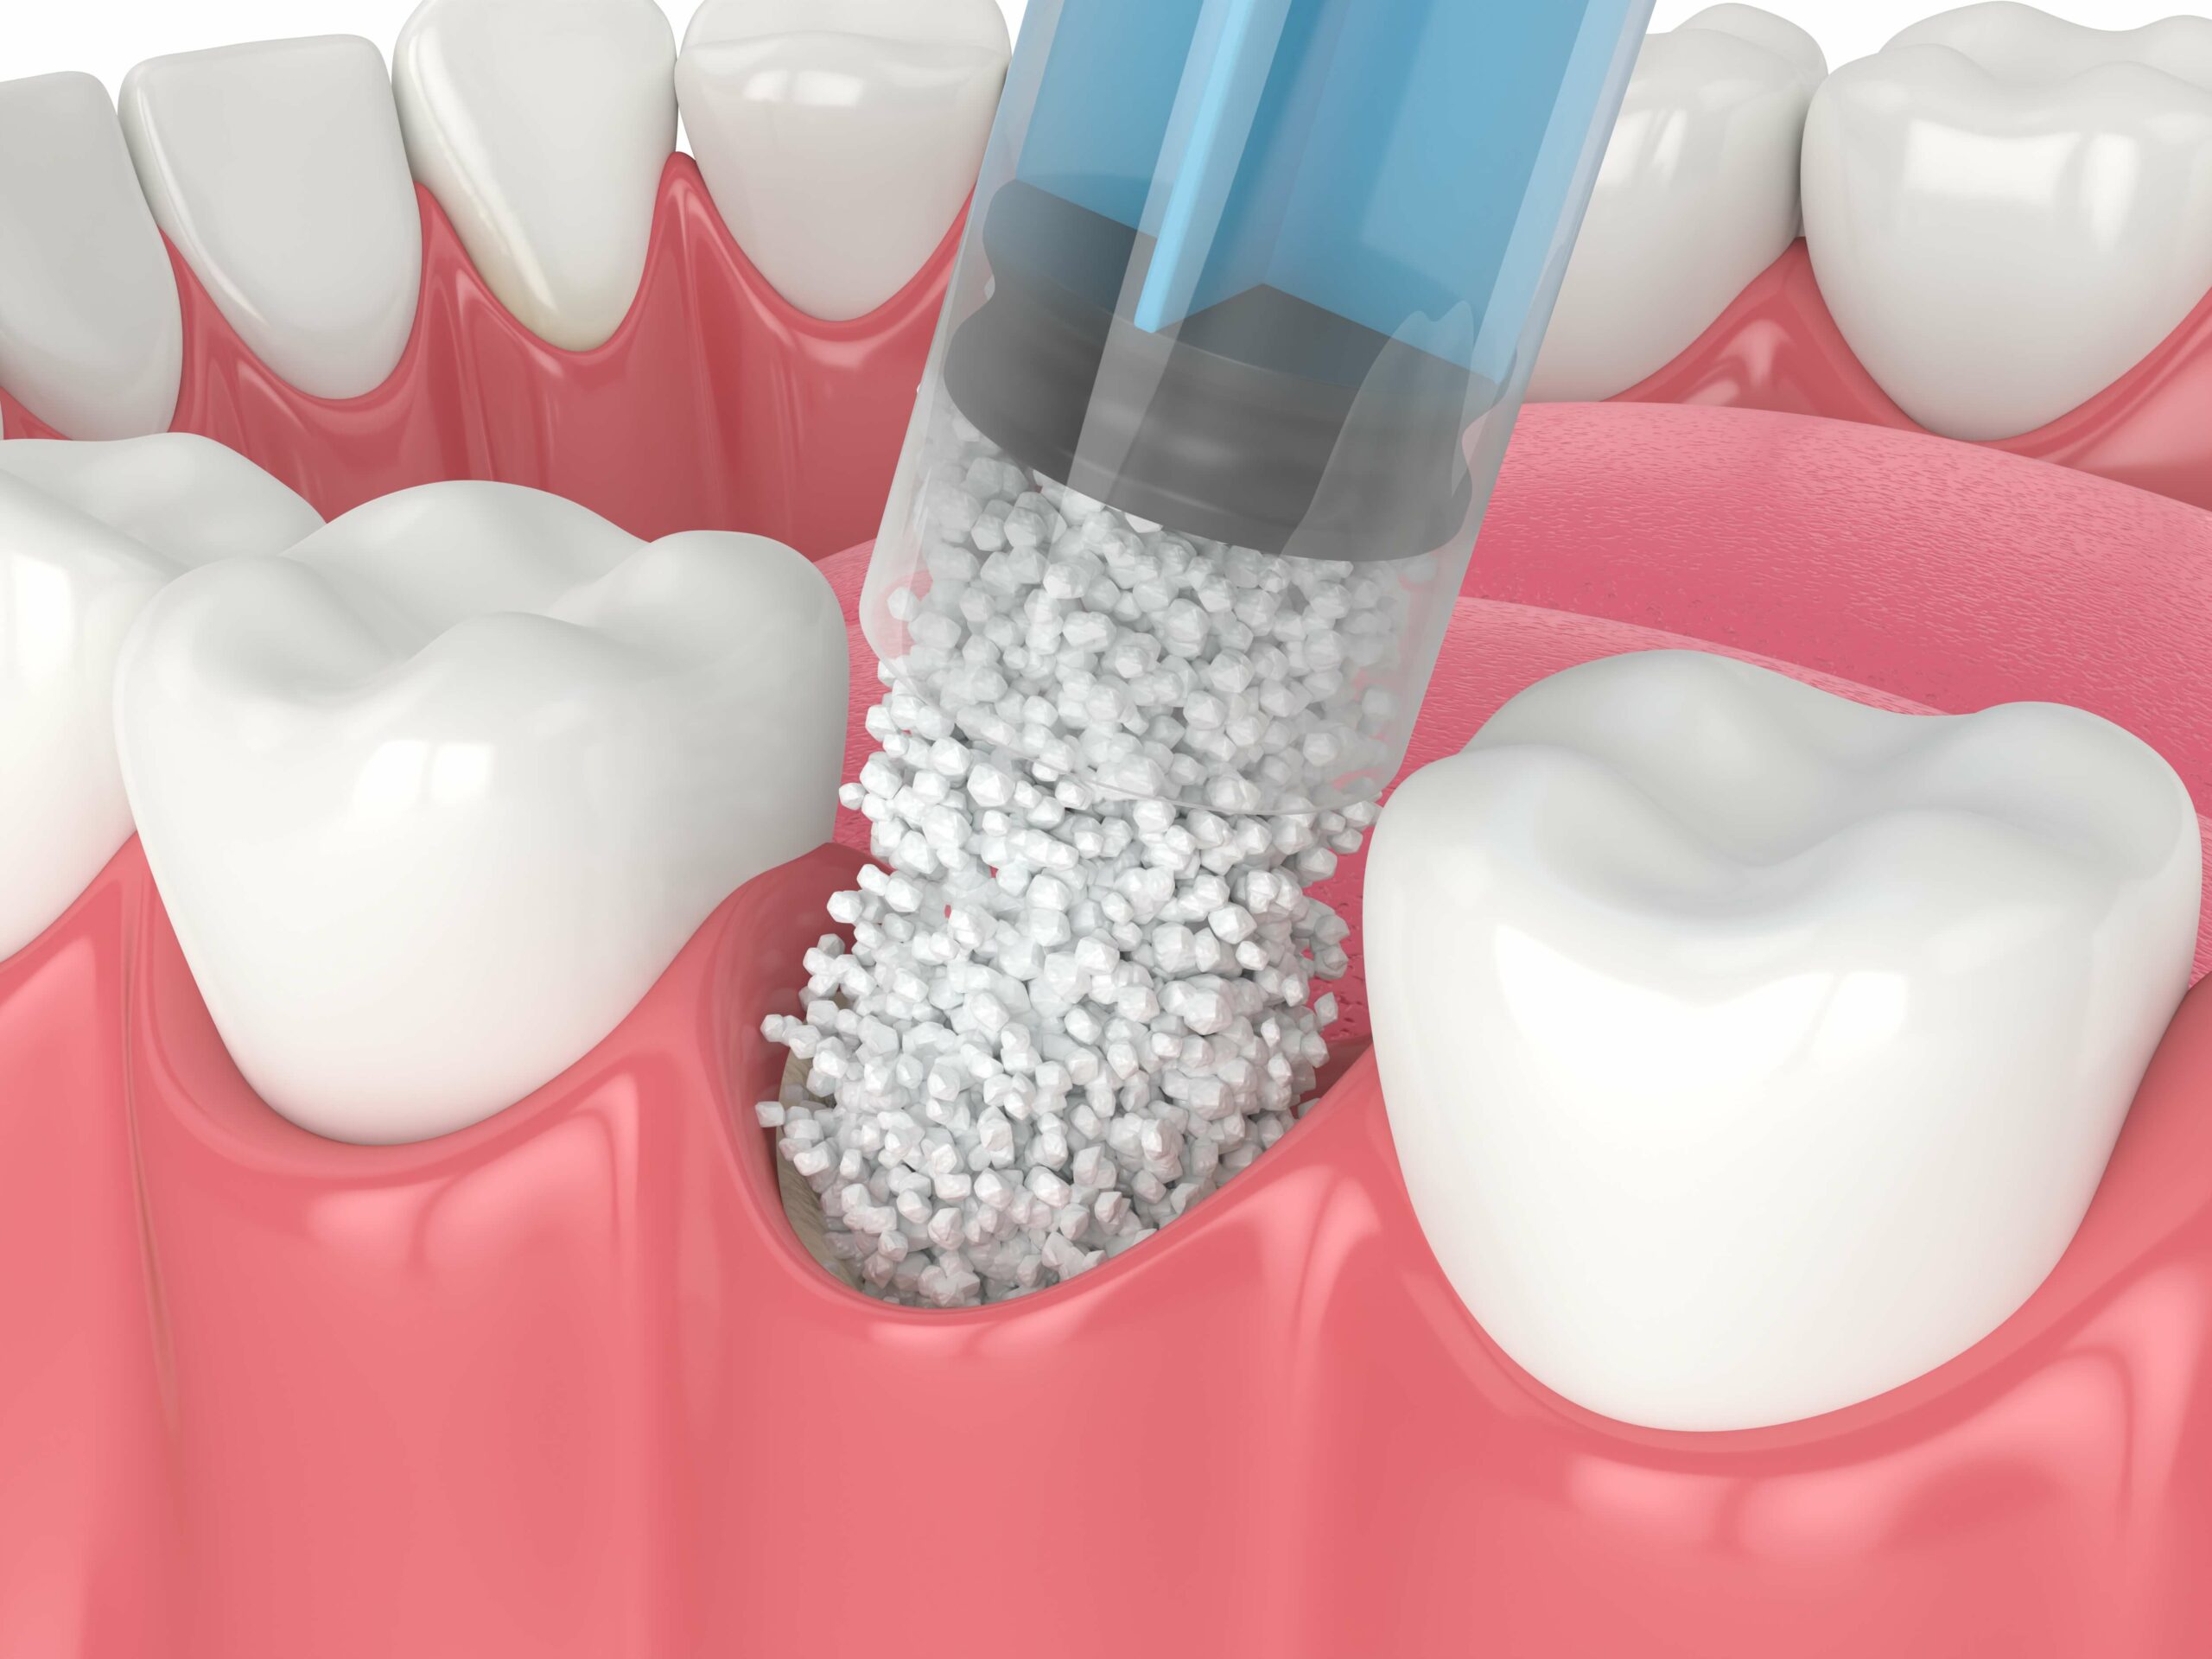 bone grafting for dental implants picture